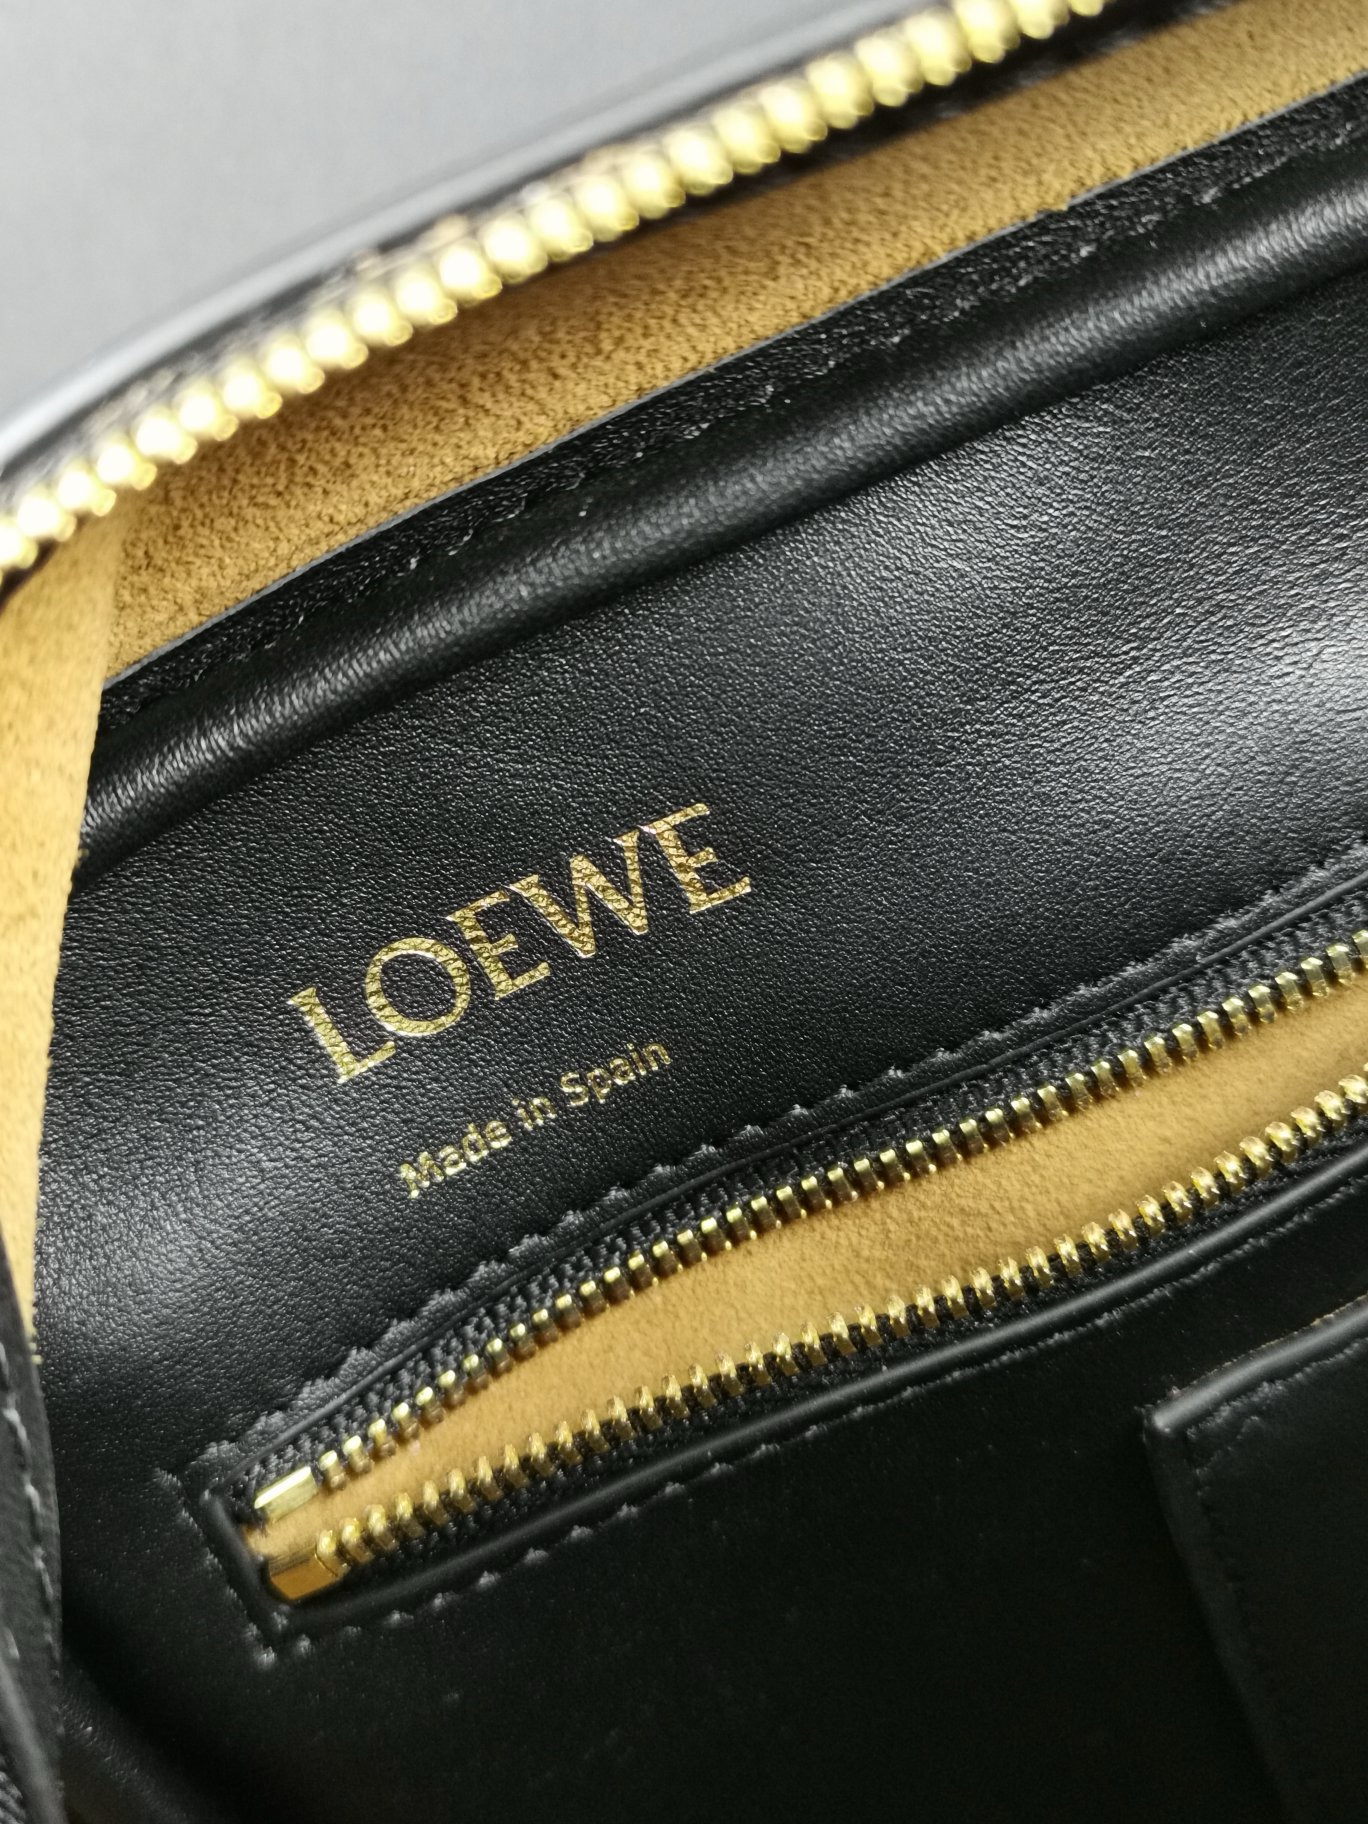 Loewe Original Leather tote 652388 black